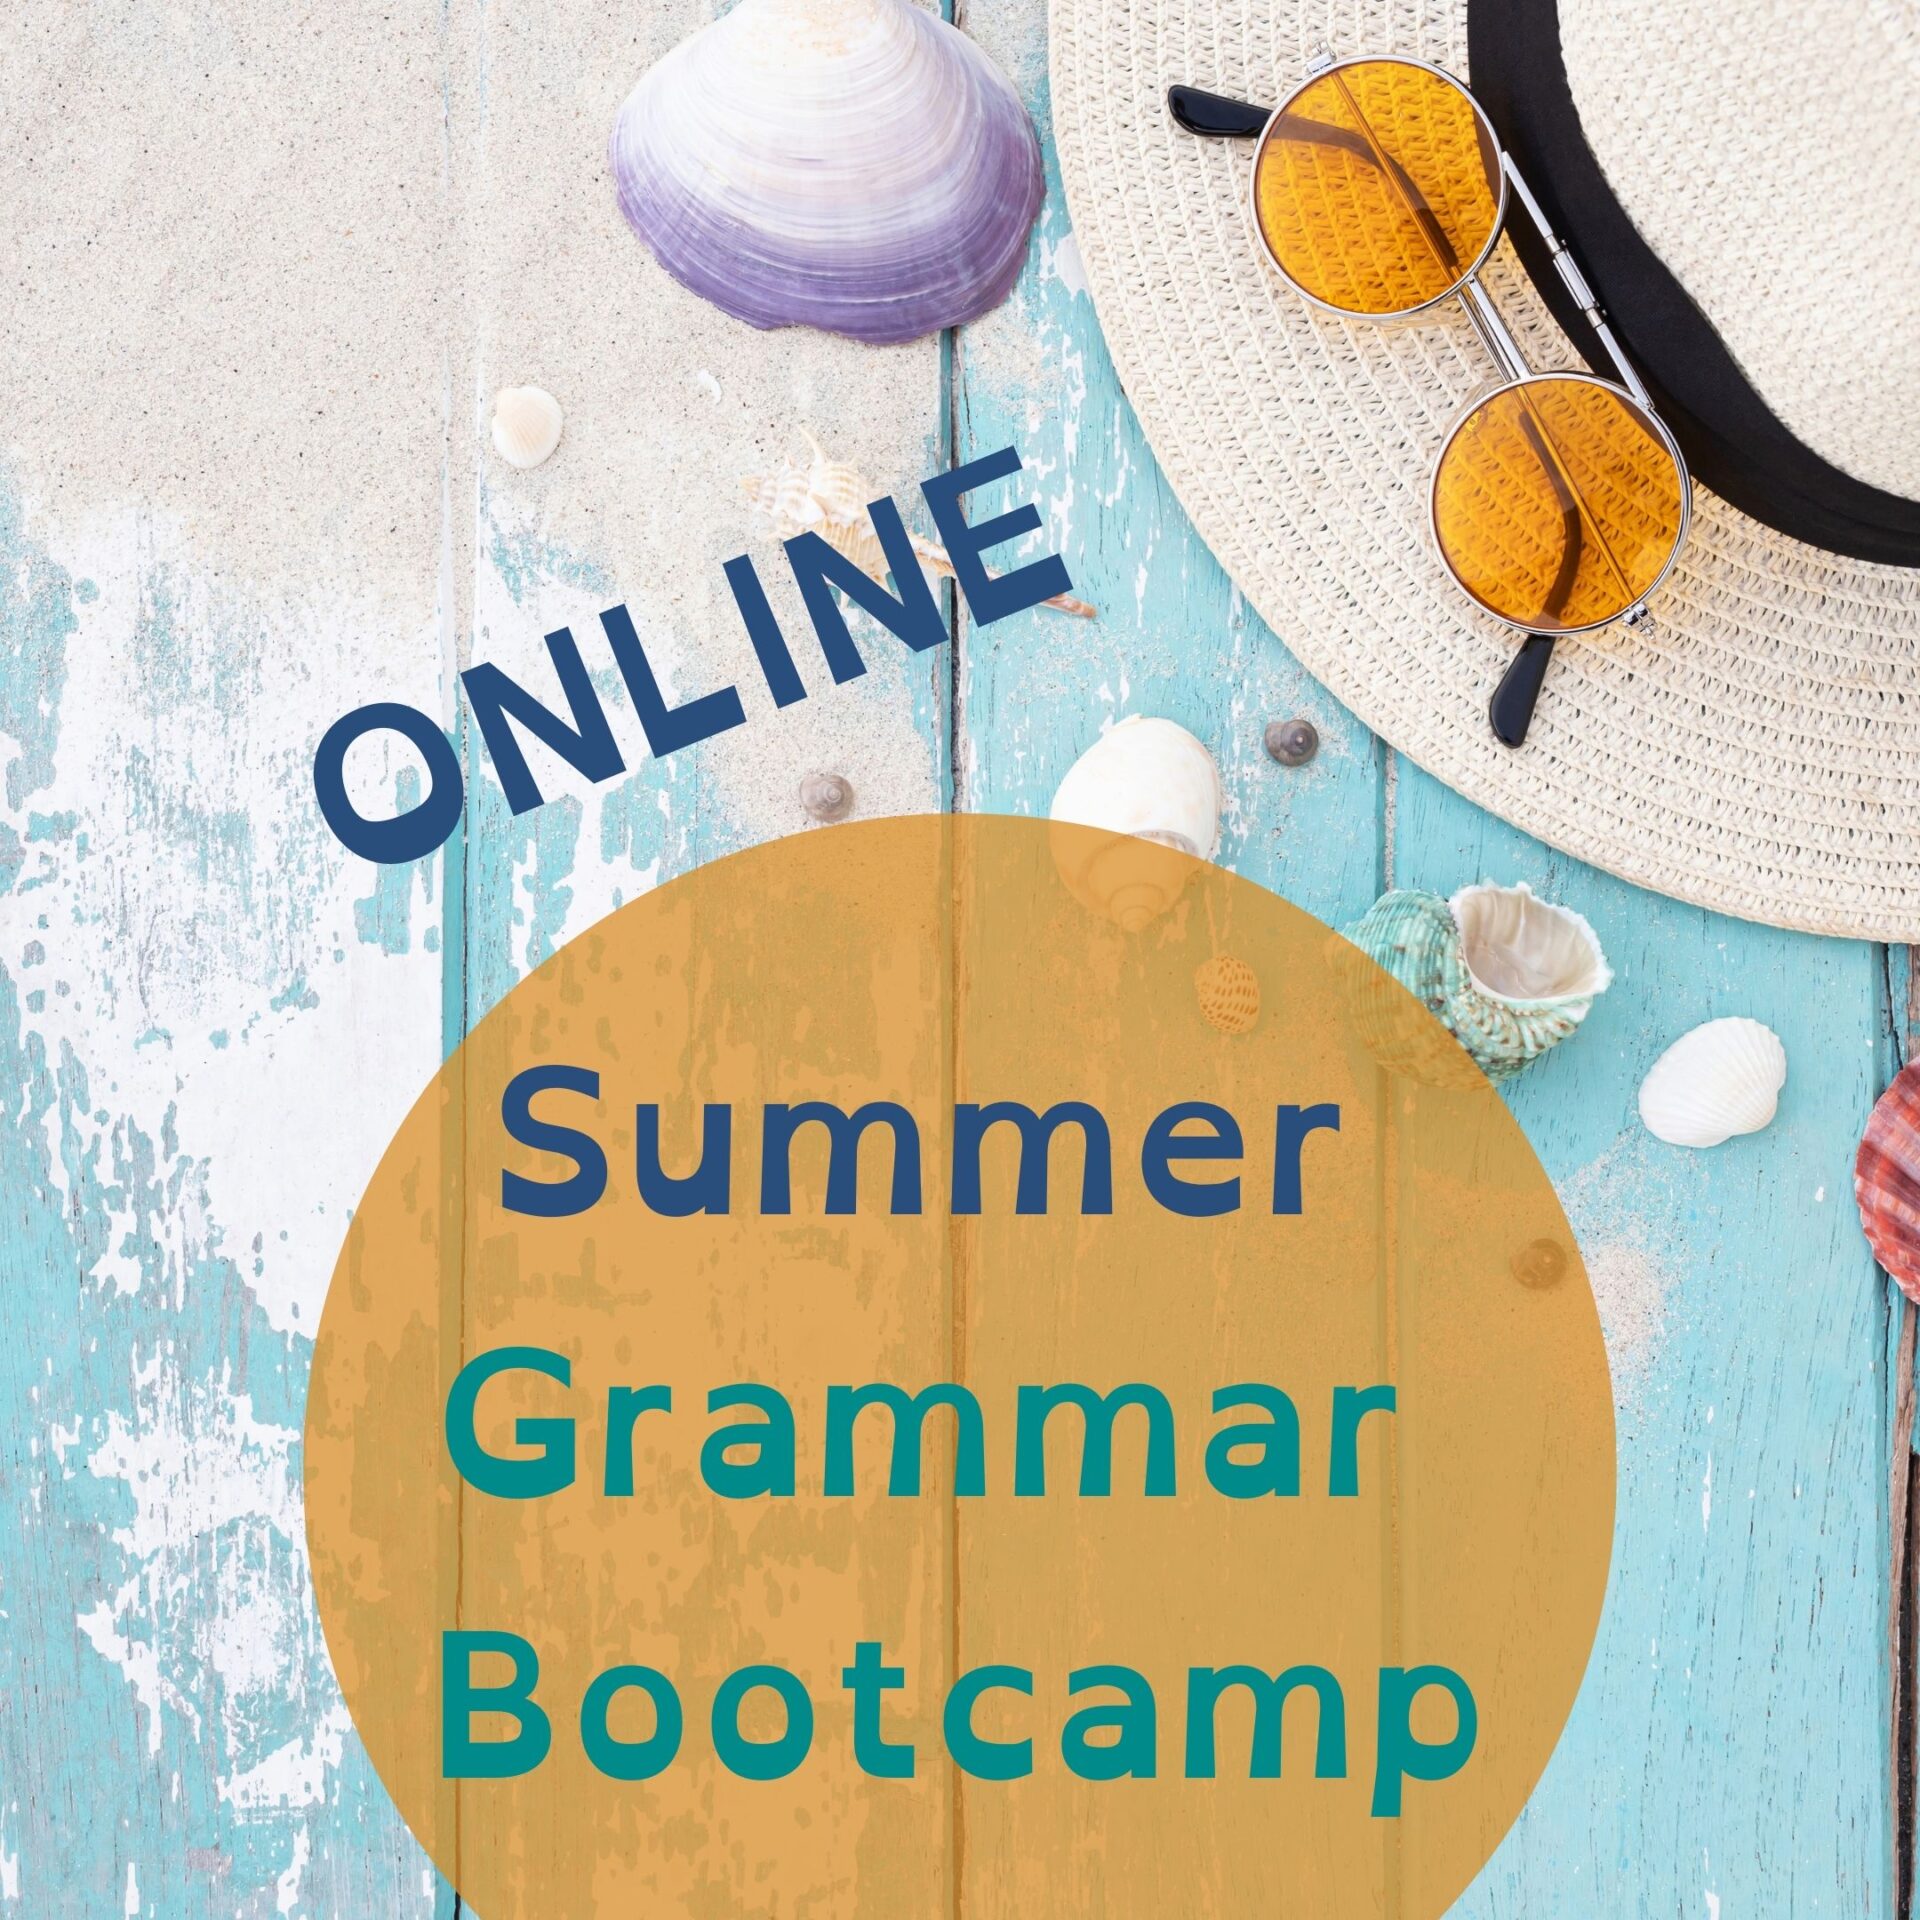 Je bekijkt nu Grammar Bootcamp